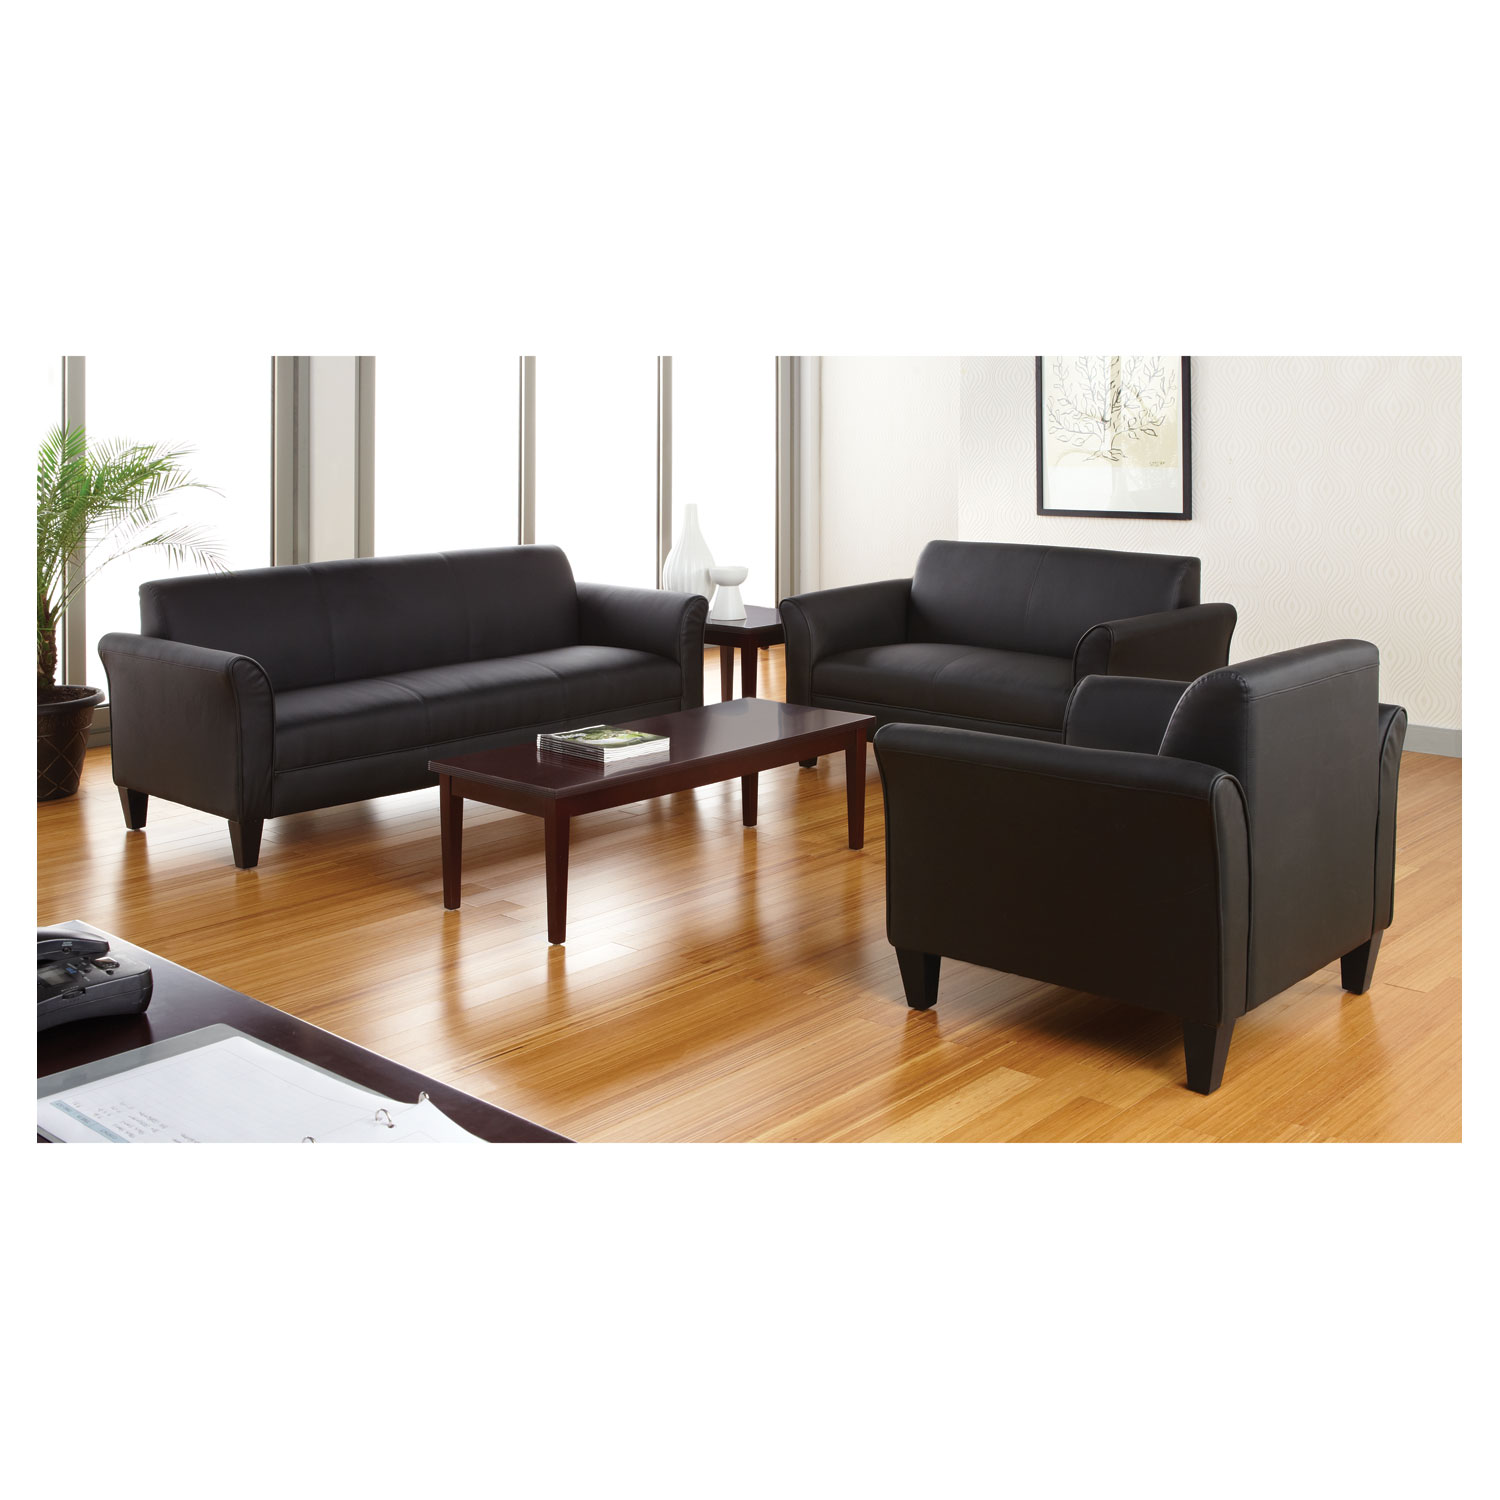 Alera Reception Lounge Furniture, 3-Cushion Sofa, 77w x 31-1/2d x 32h, Black